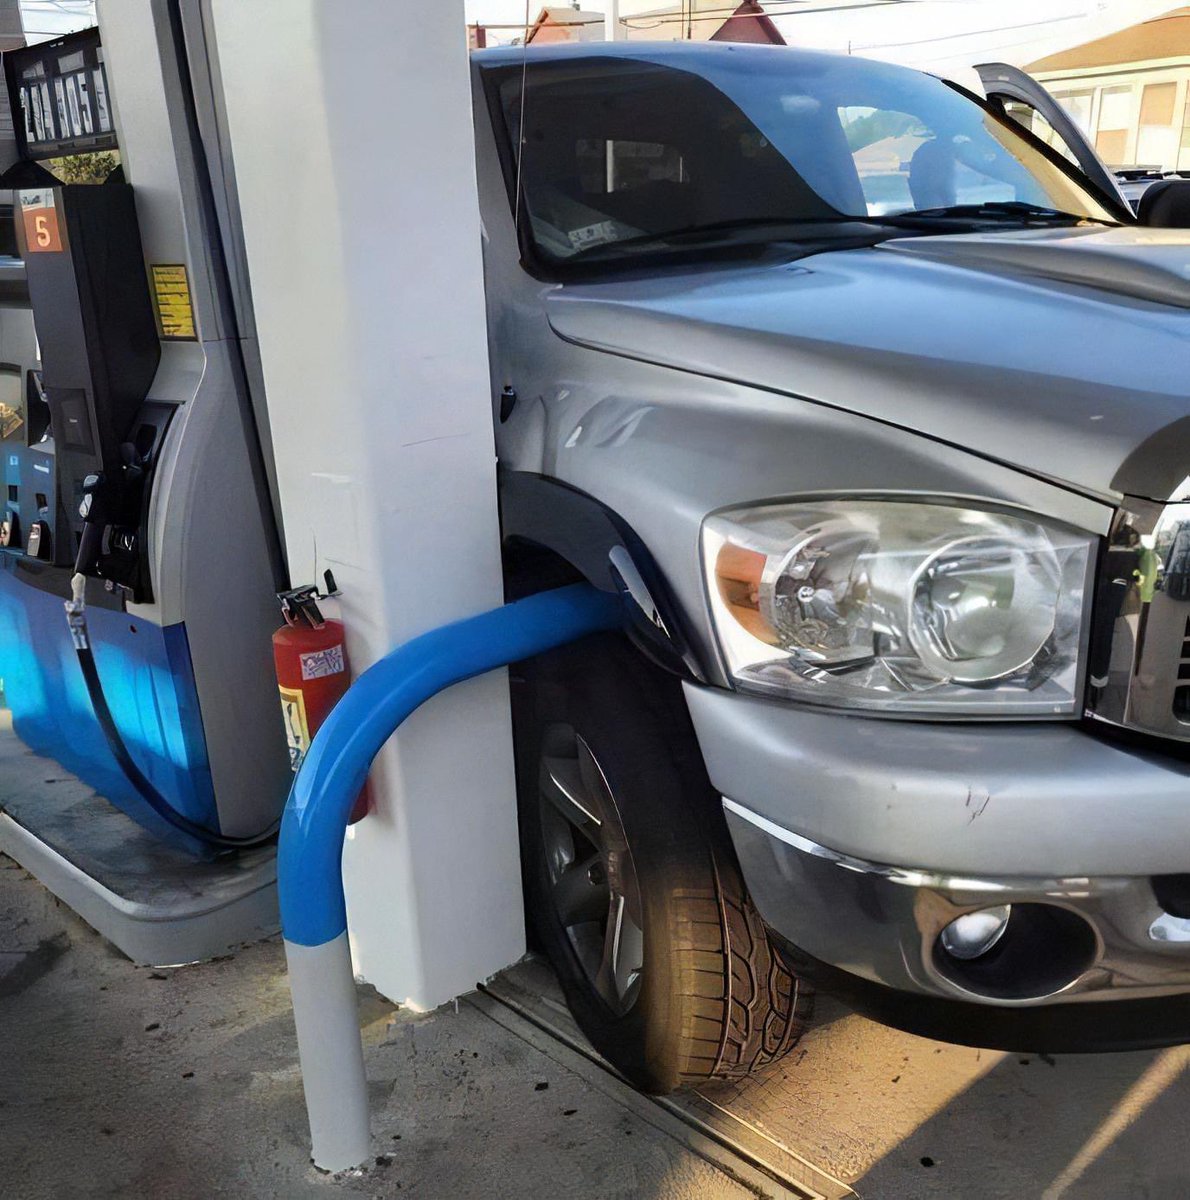 How women get gas 🫢🫢🫢